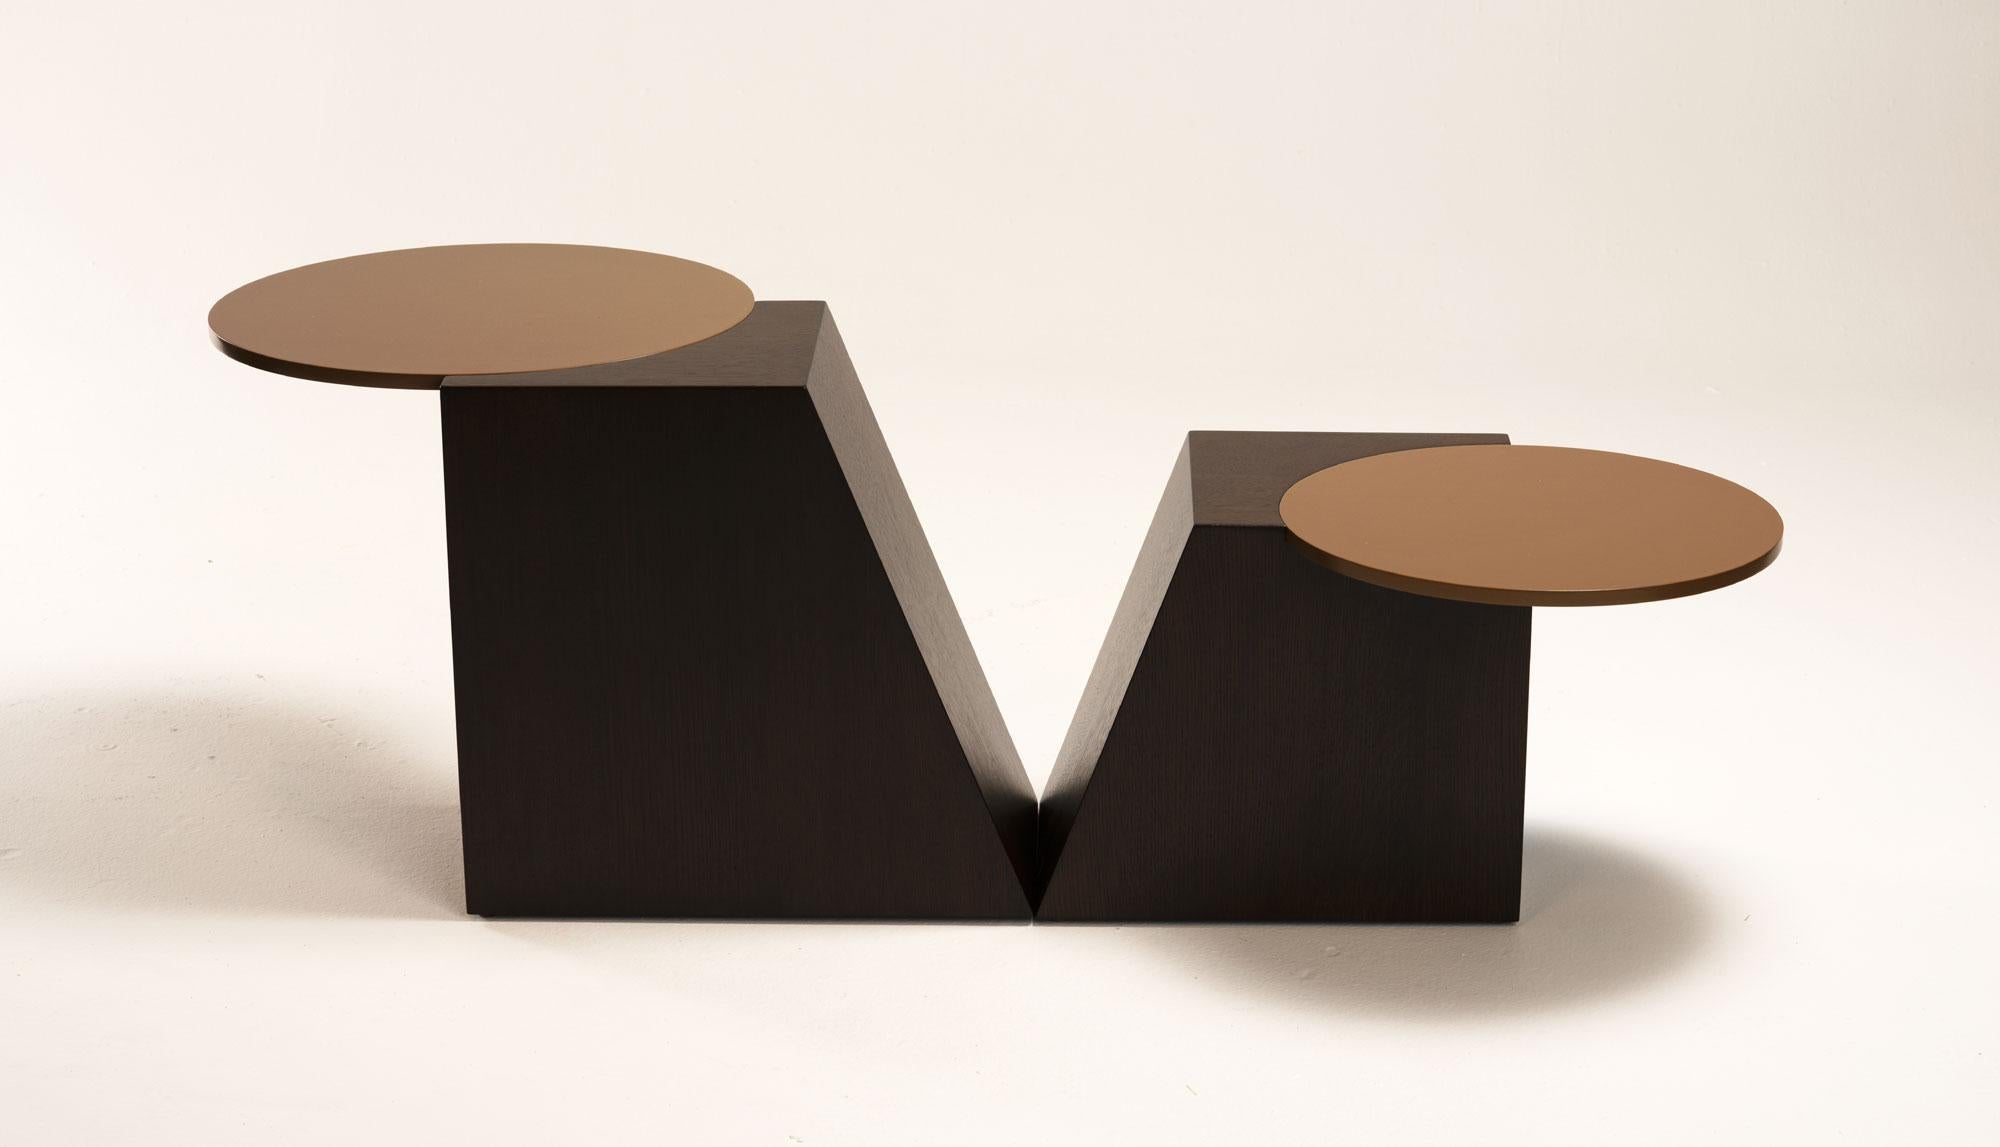 American Set of 2 V Tables by Jason Mizrahi